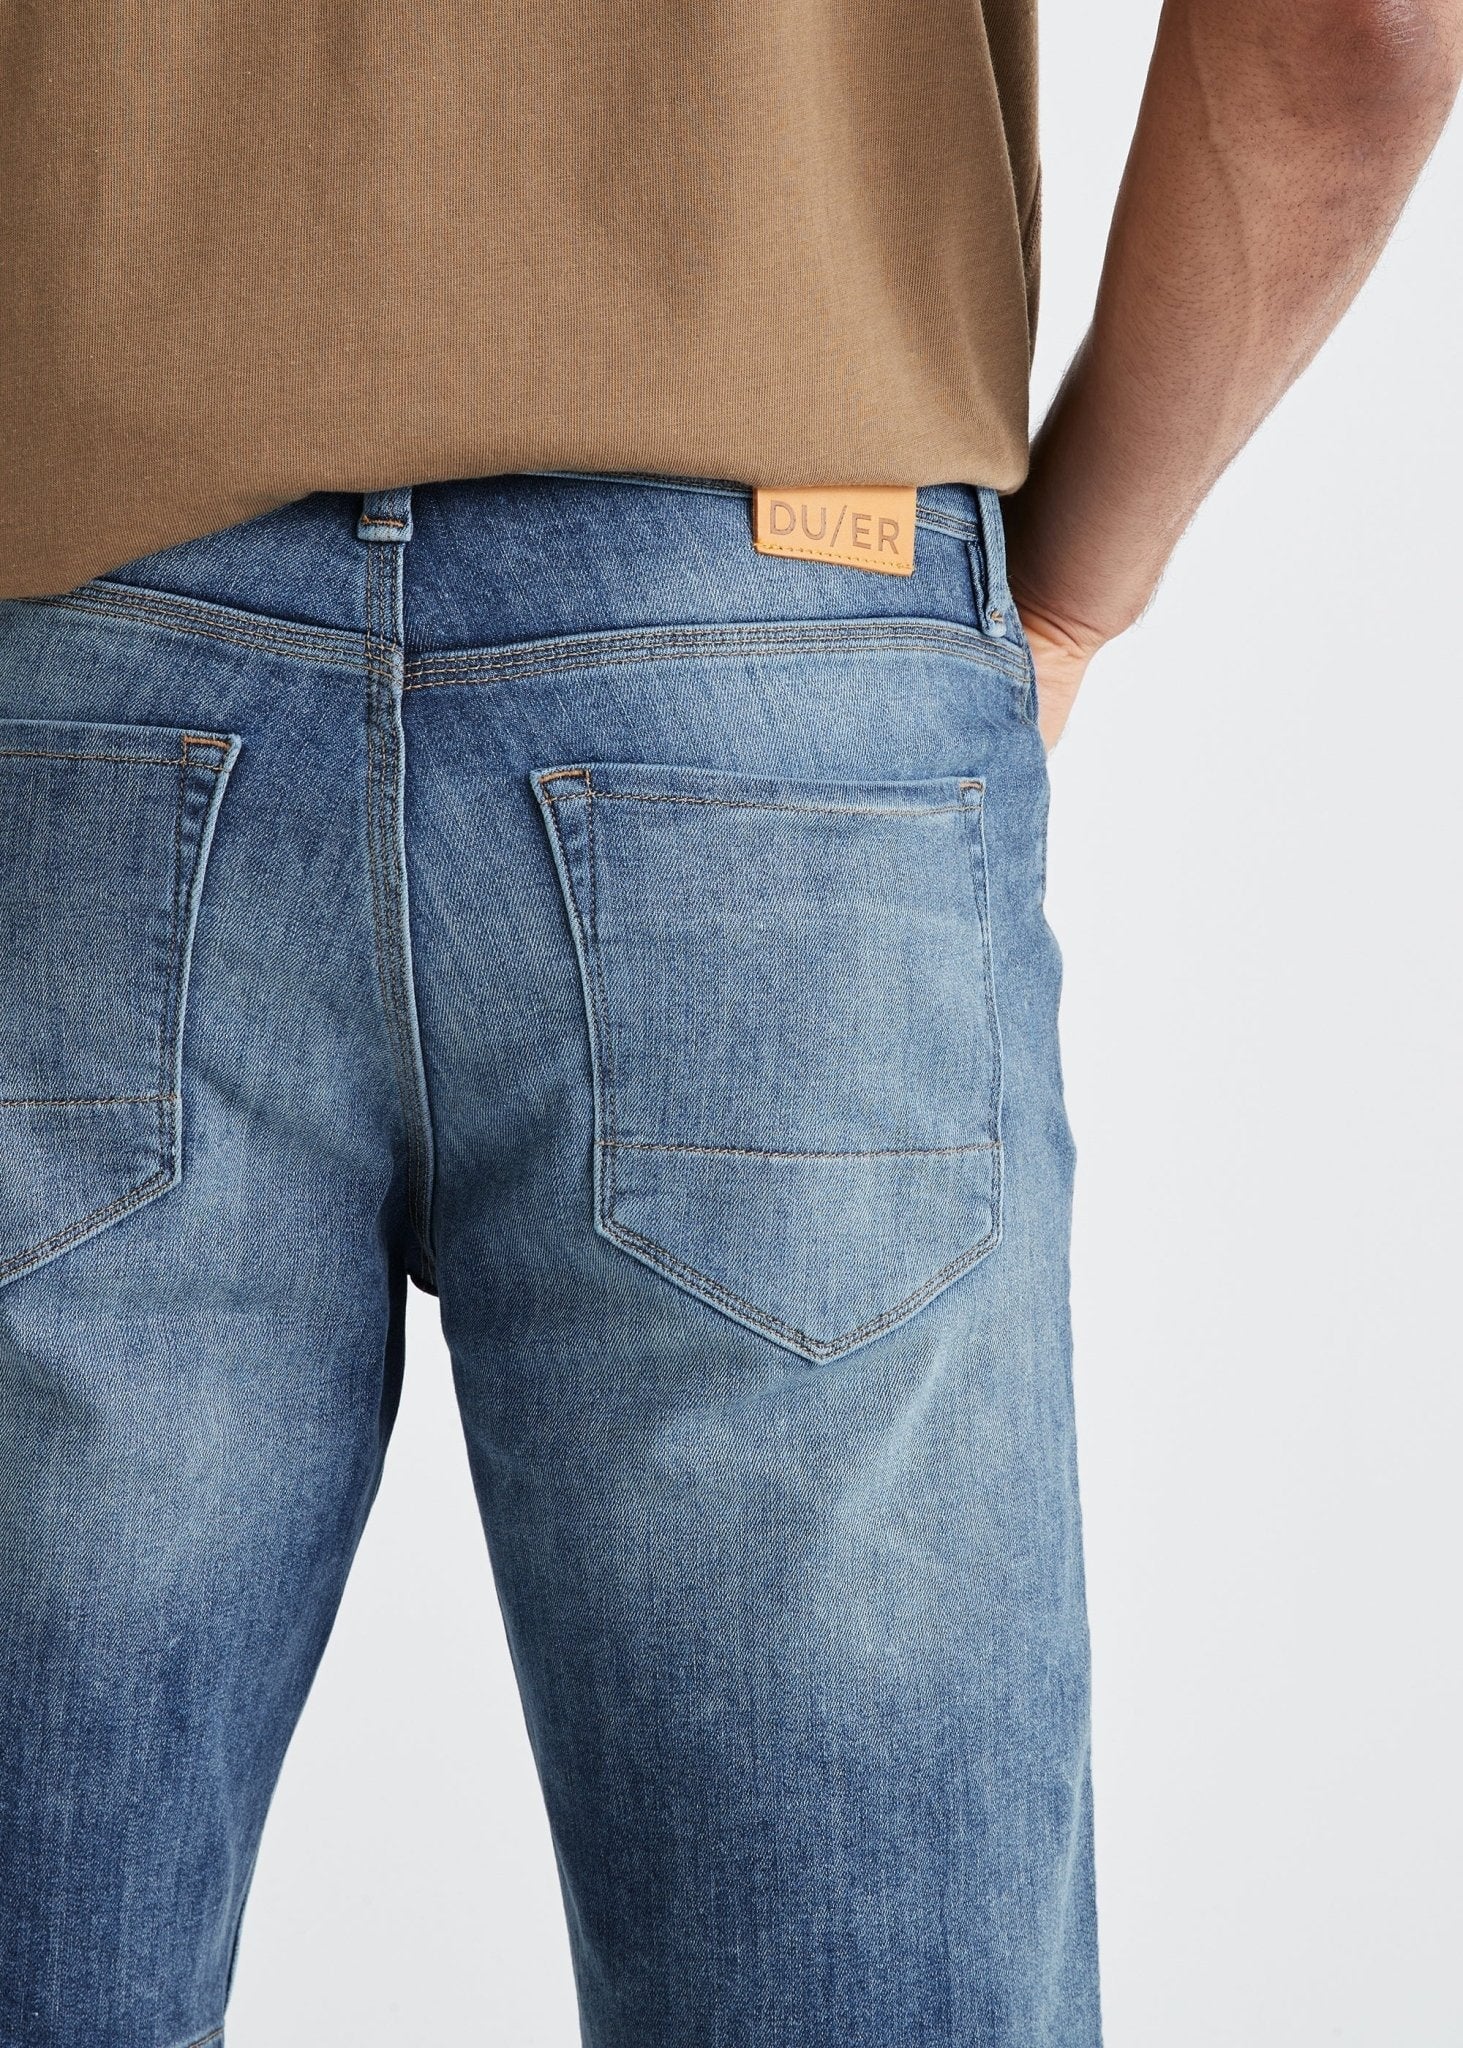 Buy Campus Sutra Men Slim Fit Solid Stretch Stylish New Trends Blue Denim  Shorts Online at Bewakoof